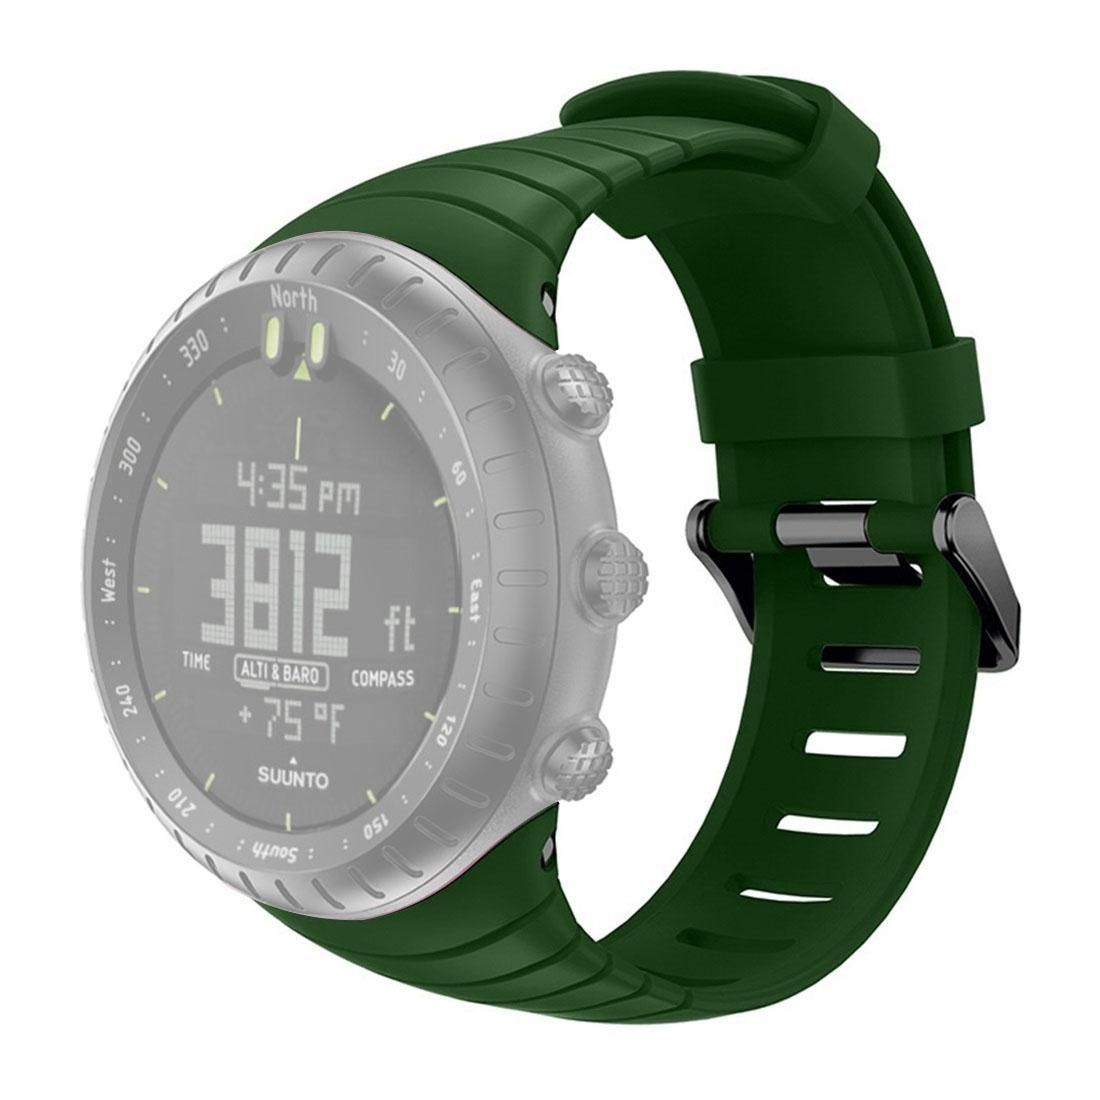 Smart Watch Silicone Wrist Strap Watchband for Suunto Core (Yellow)